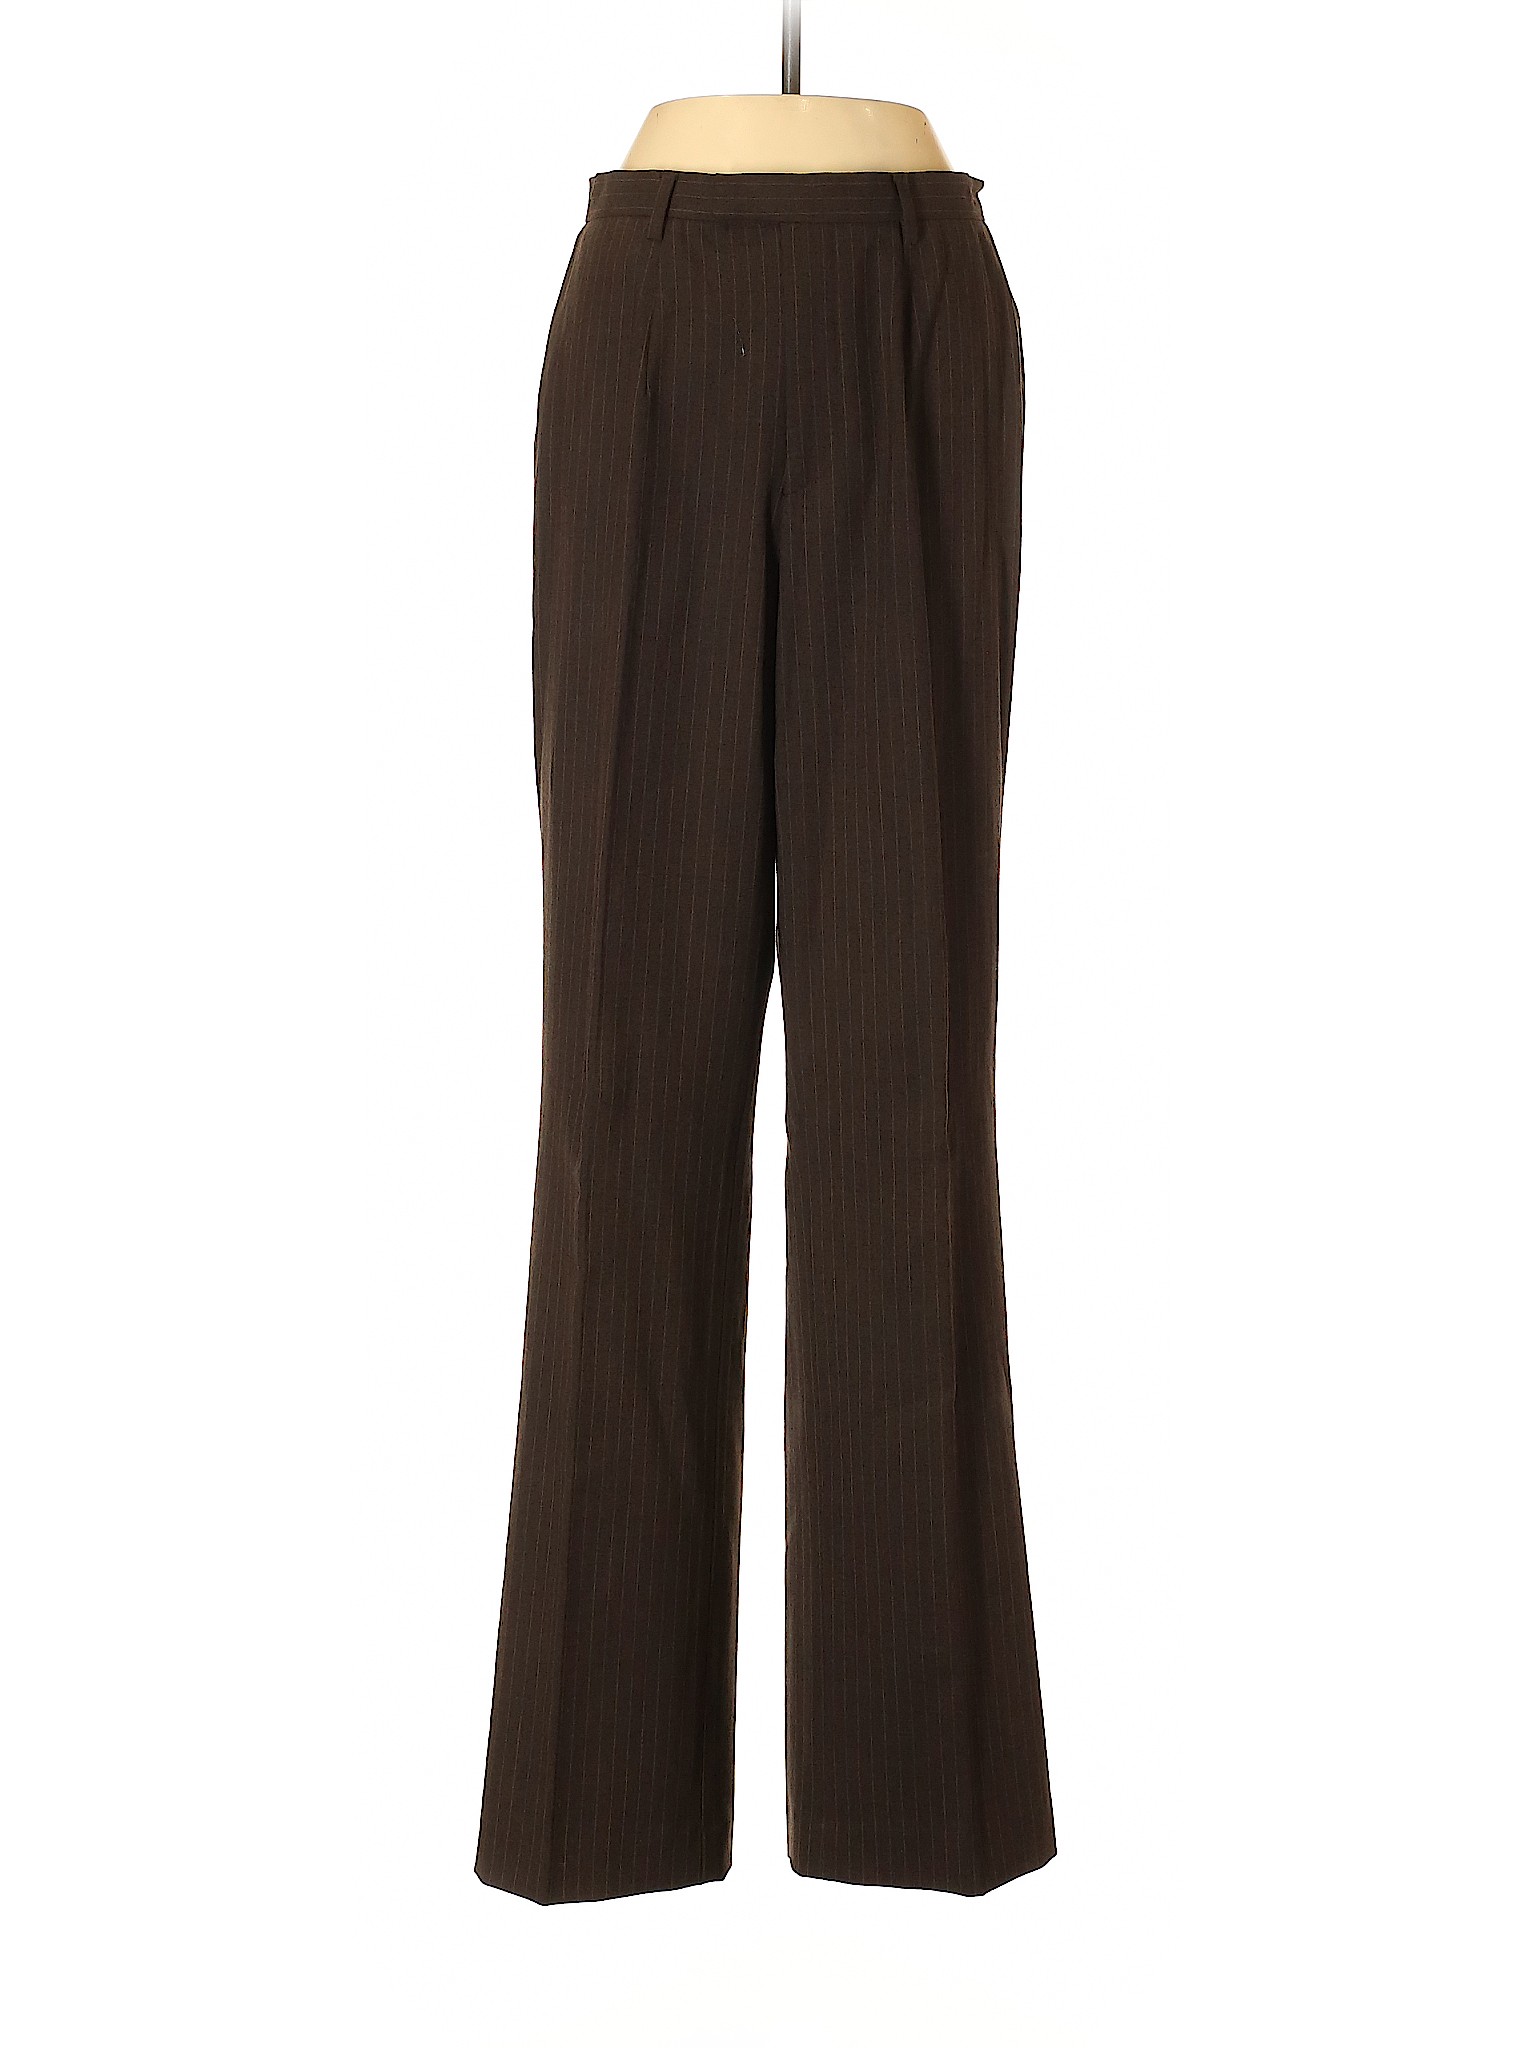 Banana Republic Women Brown Wool Pants 4 | eBay